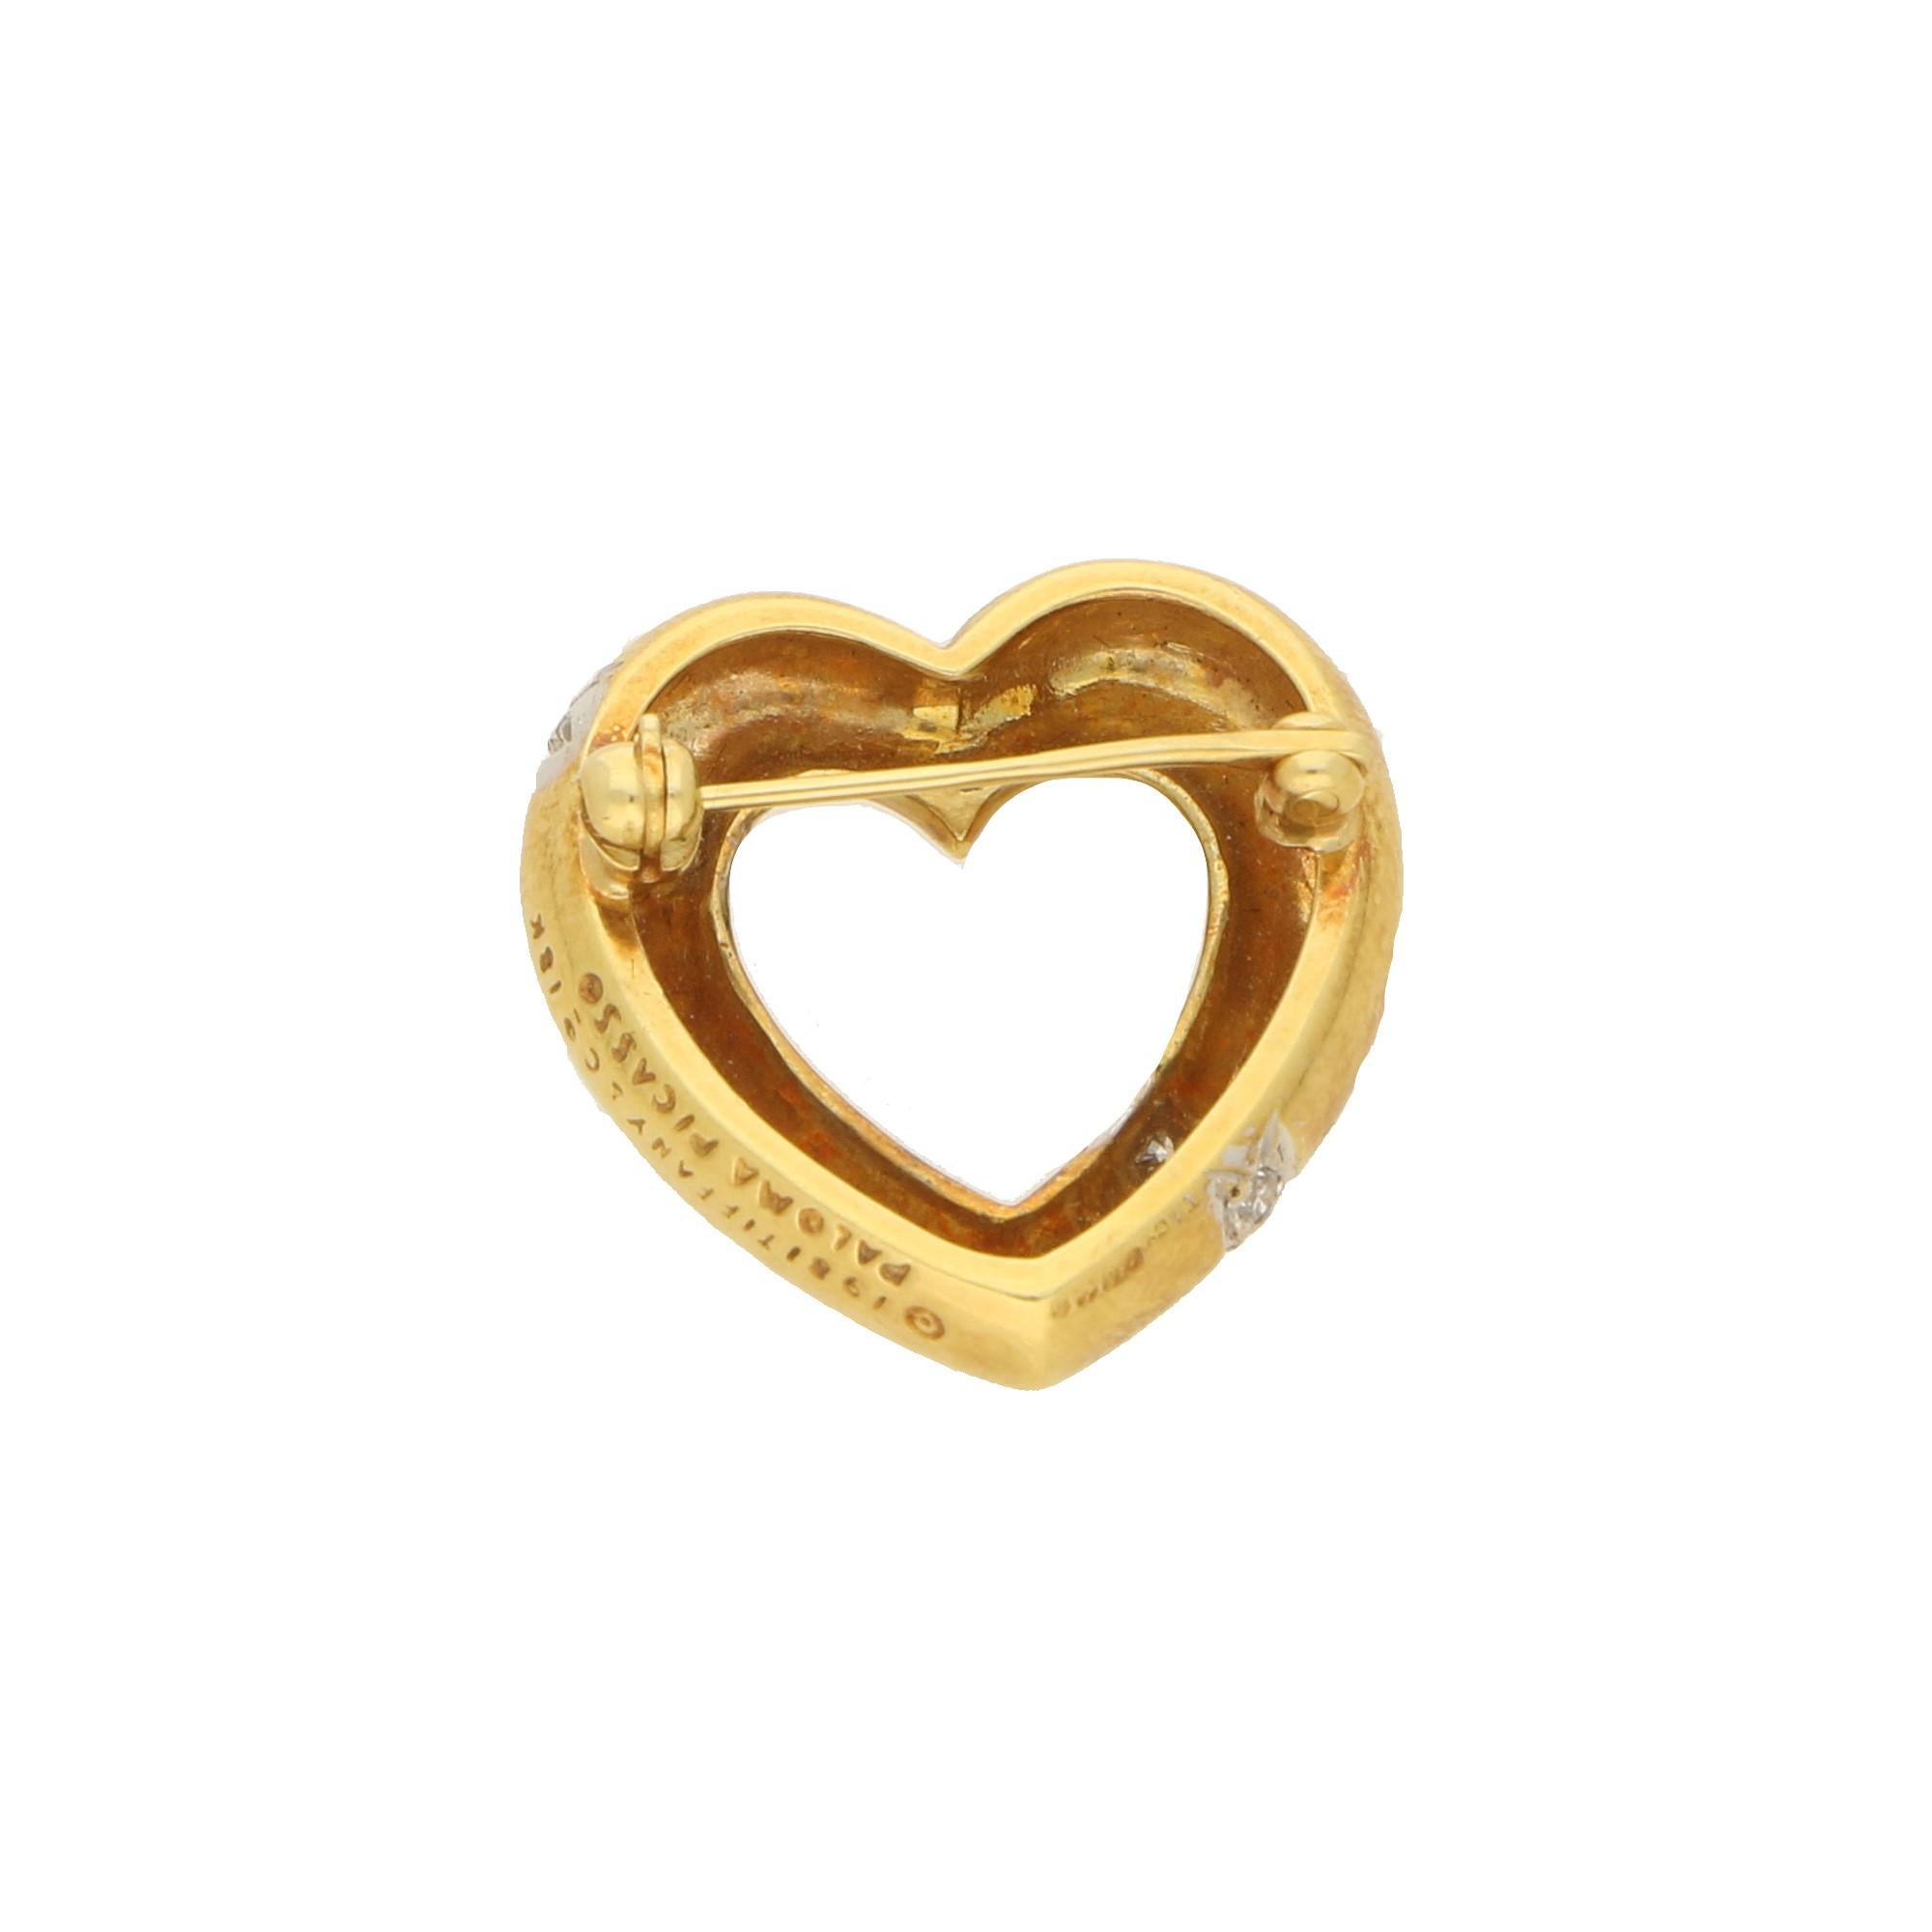 Round Cut Paloma Picasso Tiffany & Co. Diamond Heart Brooch in 18 Carat Gold, circa 1981